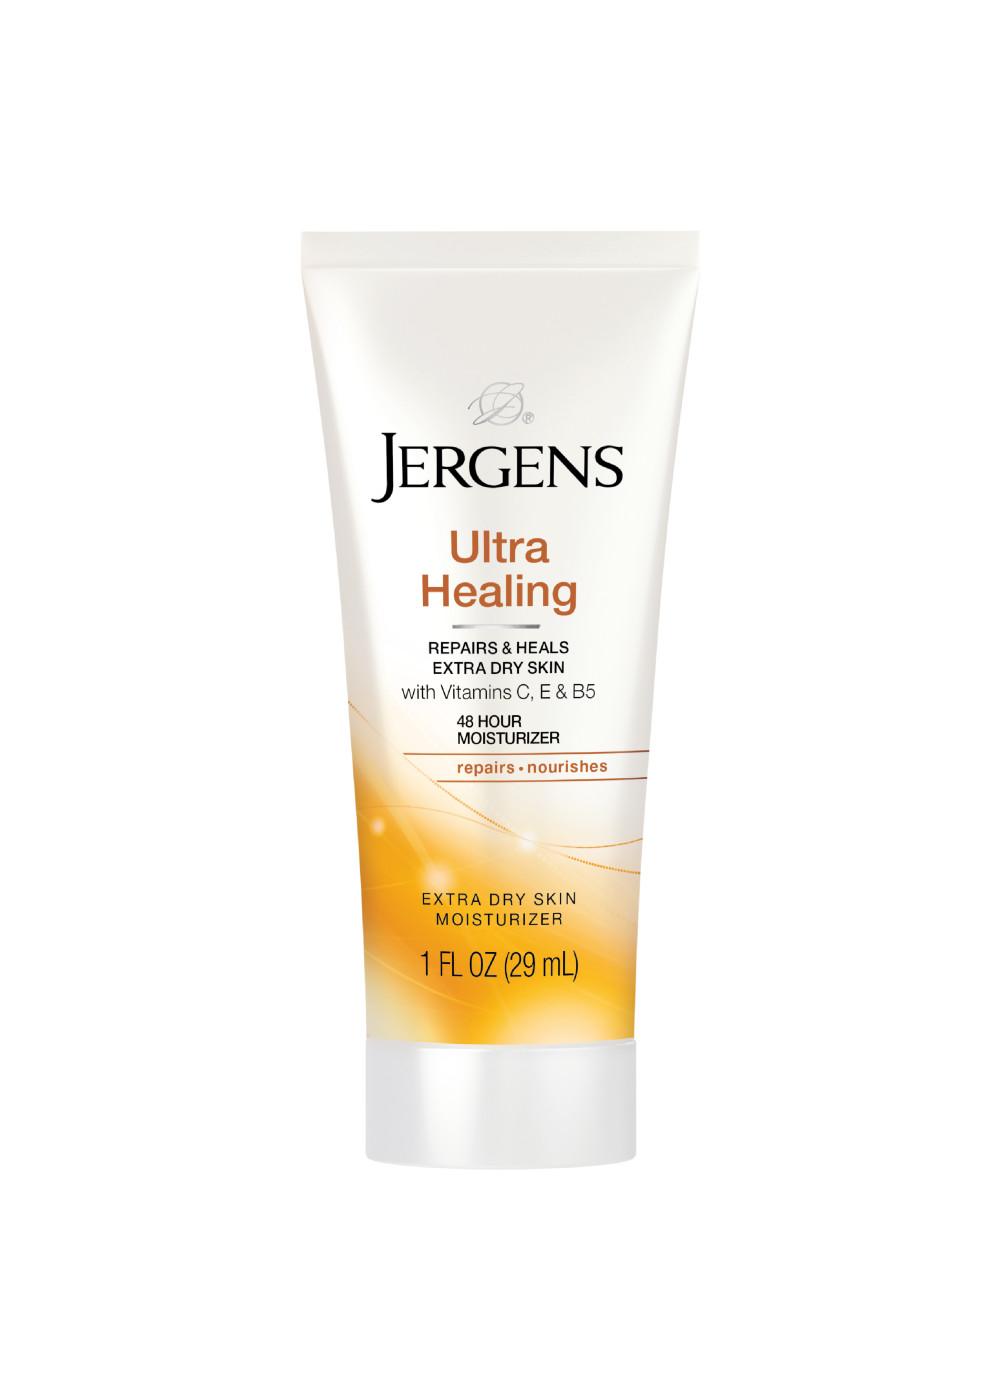 Jergens Ultra Healing Dry Skin Moisturizer; image 1 of 4